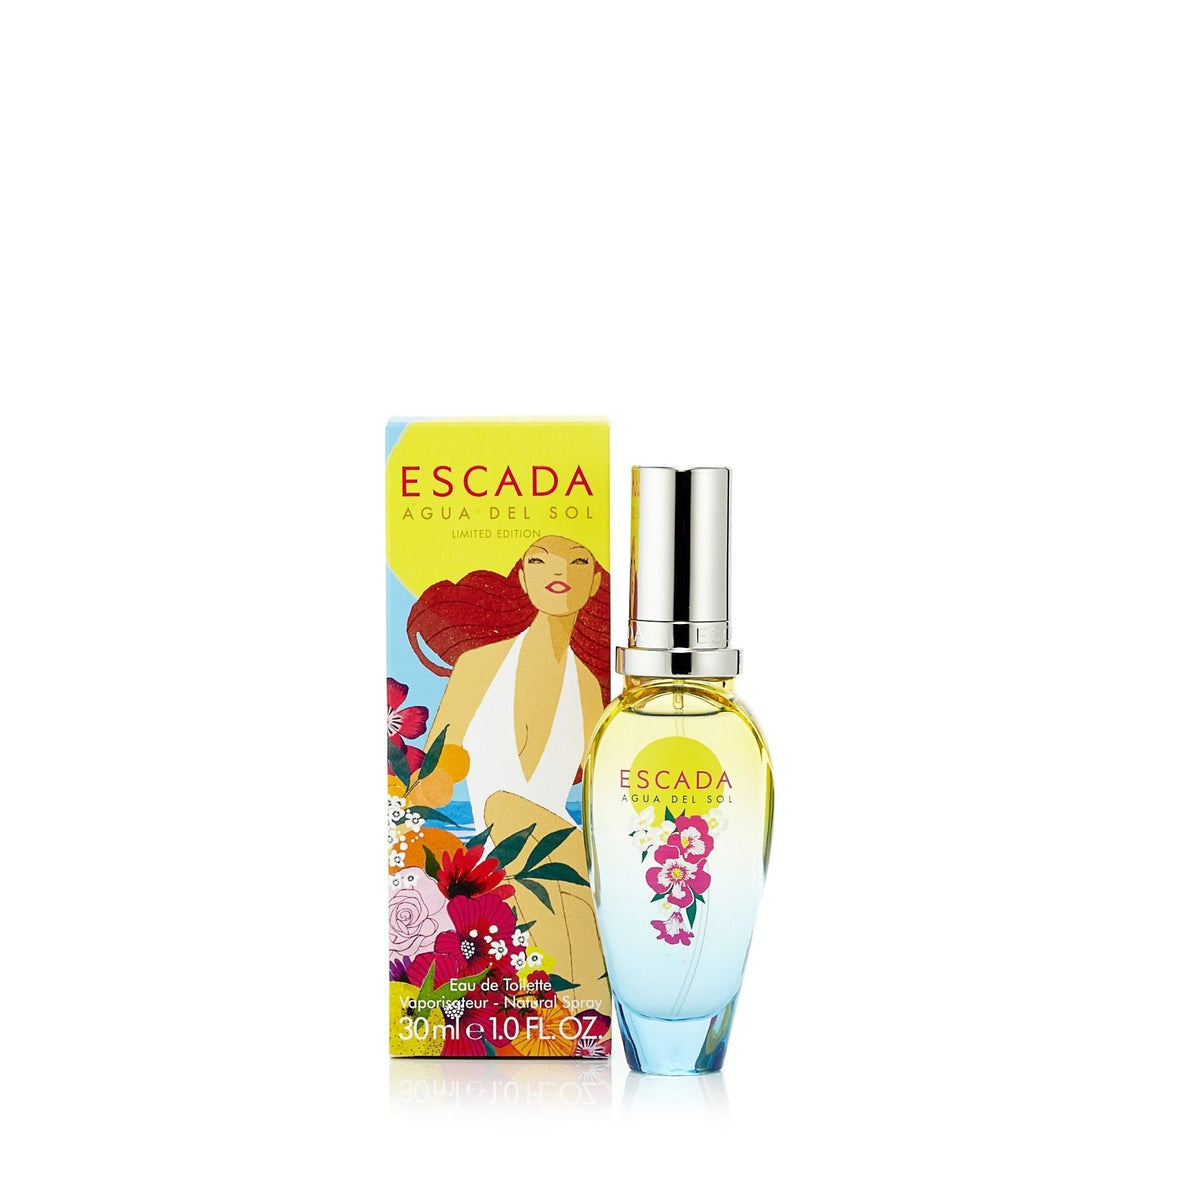 Agua Del Sol Eau de Toilette Spray for Women by Escada 1.0 oz.